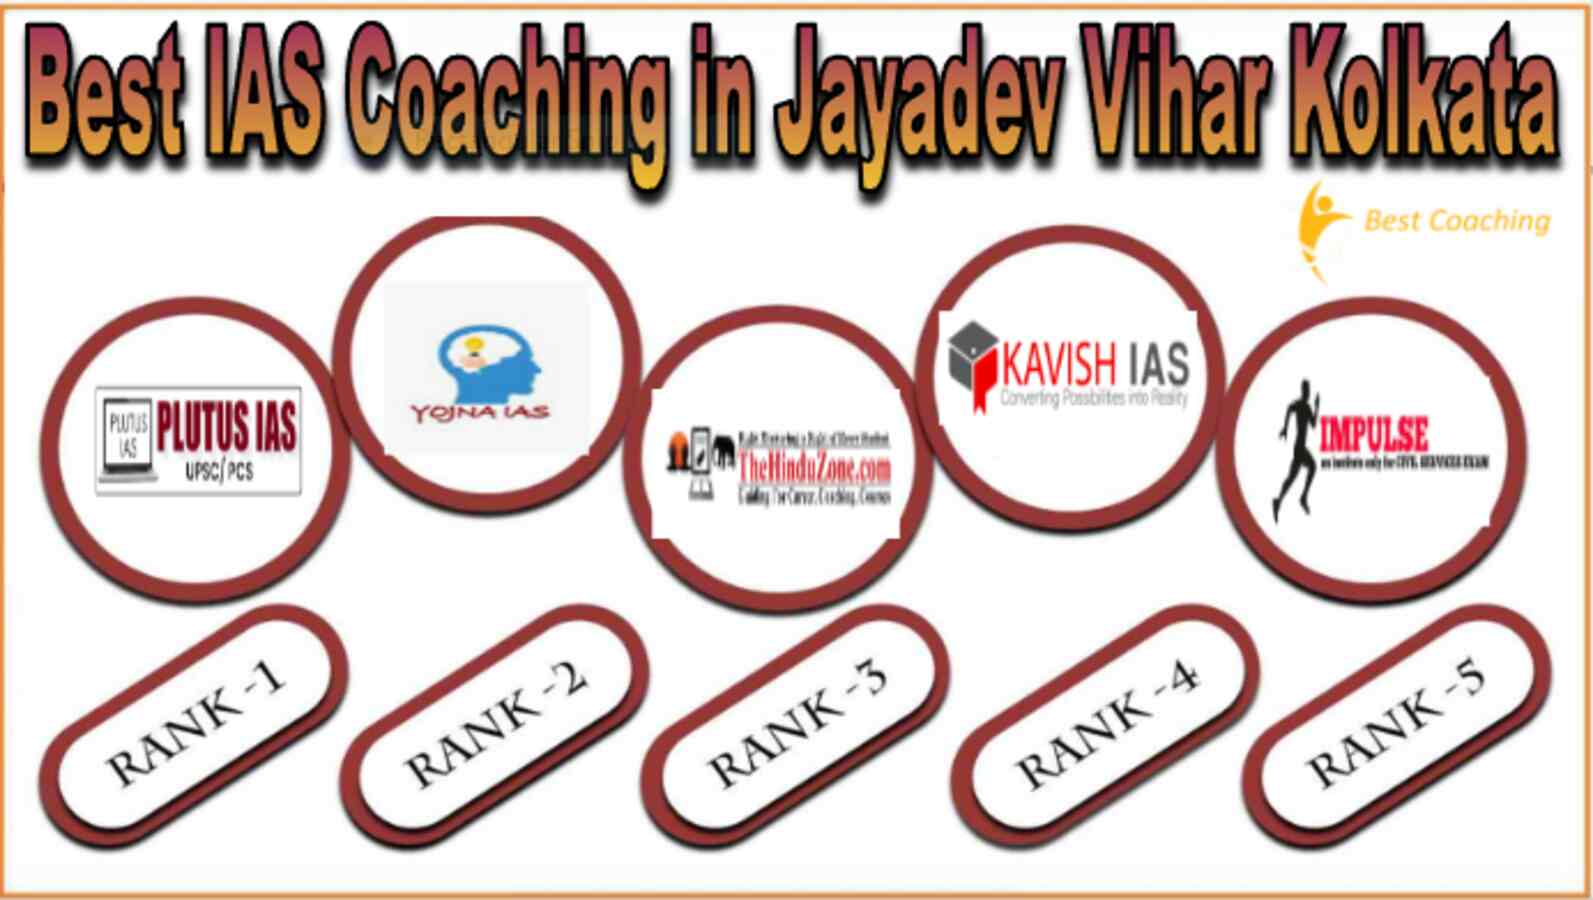 Remove term: Best IAS coaching in Jayadev Vihar Kolkata Best IAS coaching in Jayadev Vihar Kolkata